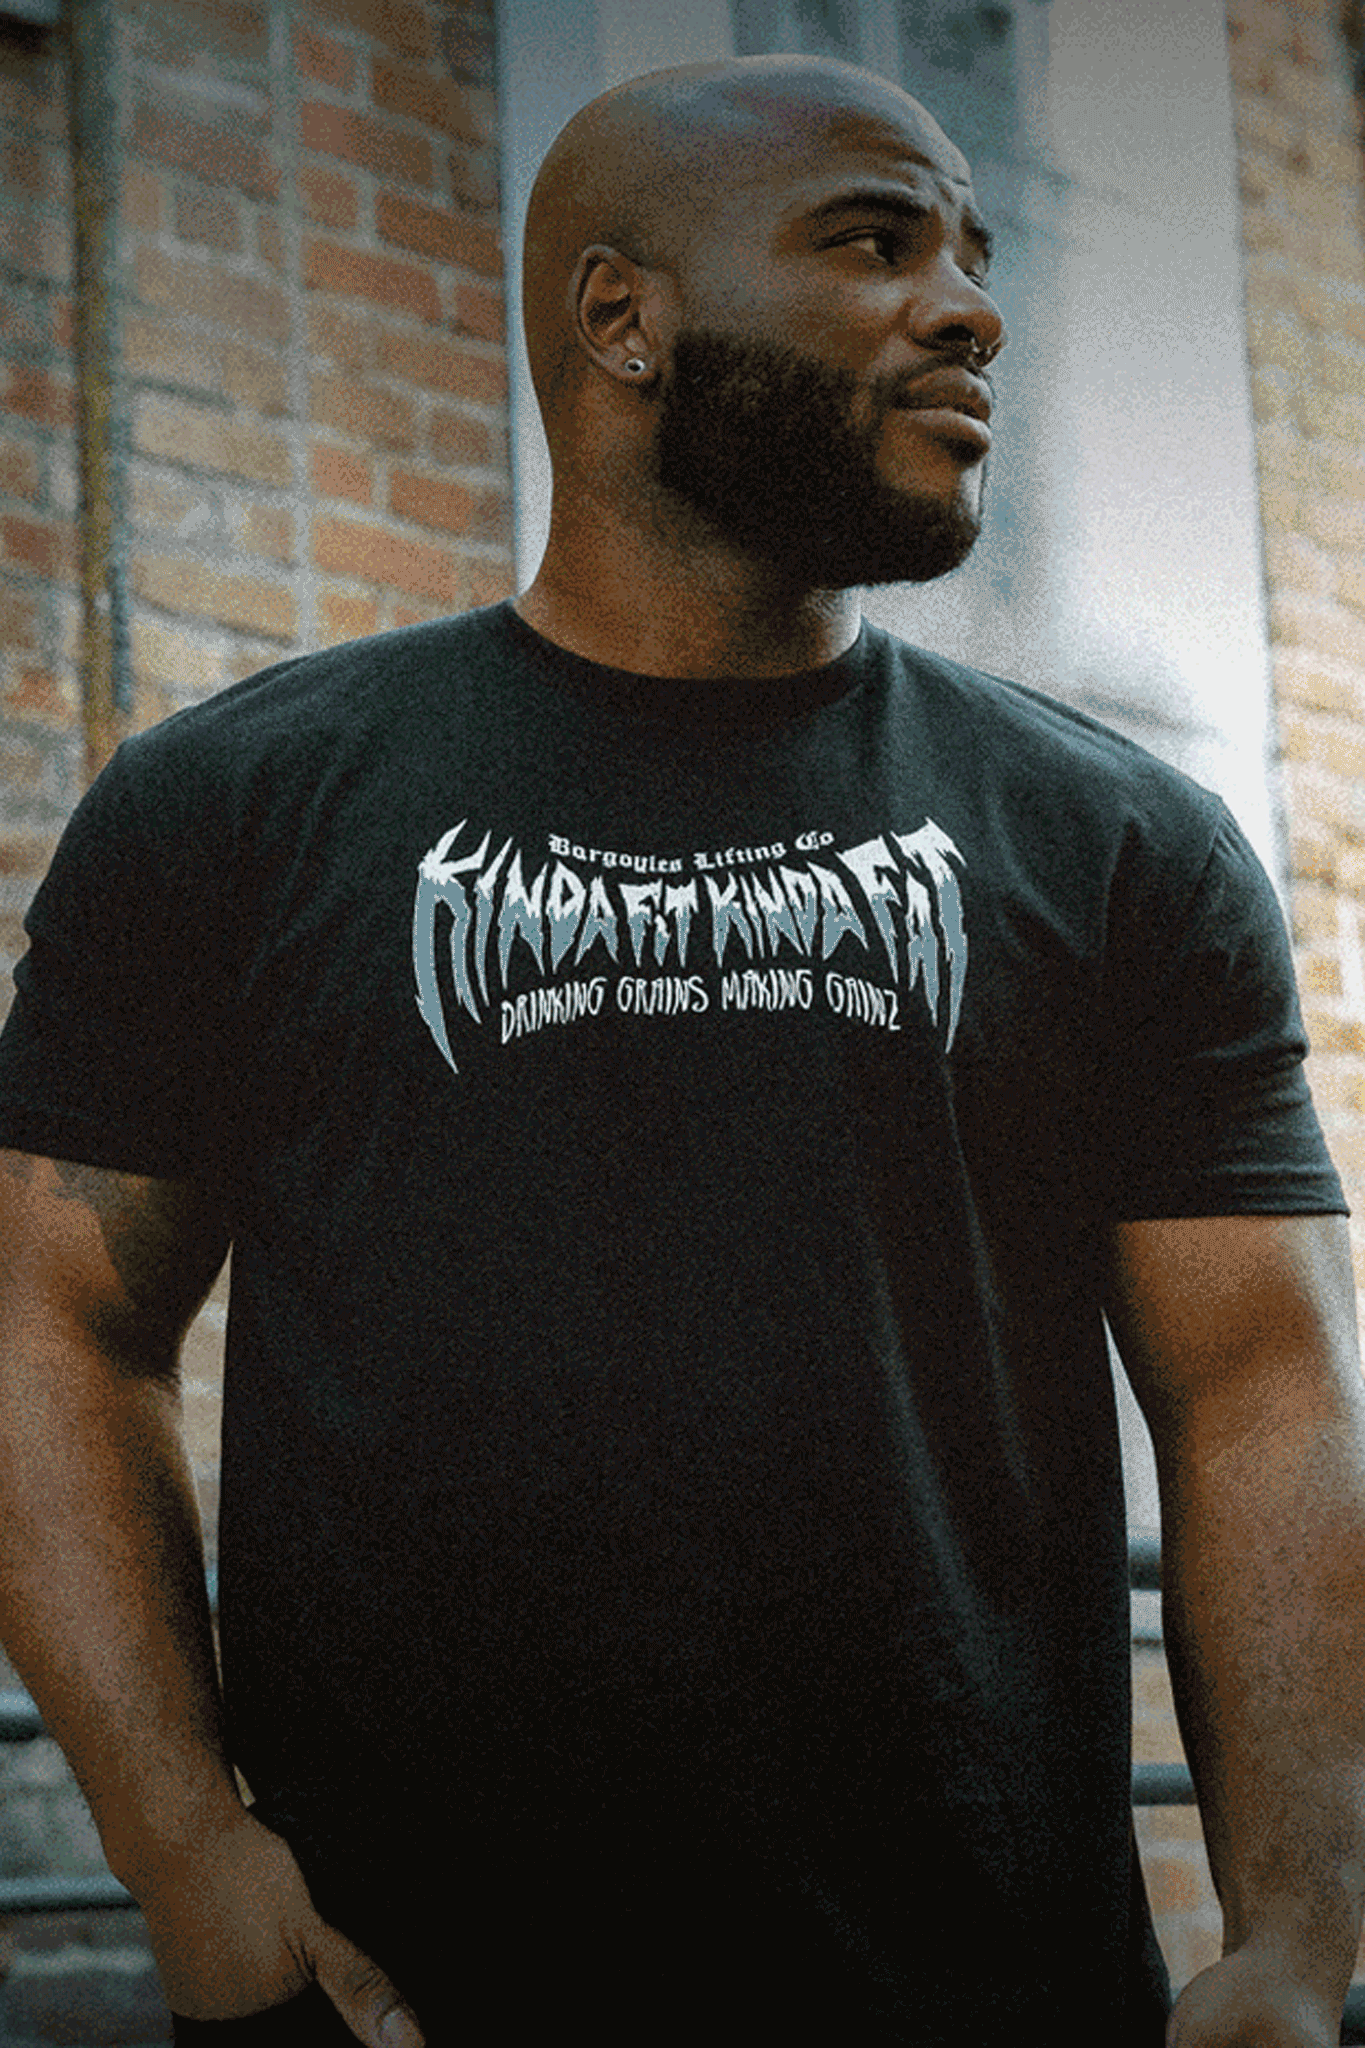 2XL Bigdude Men's Official Jurassic Park Print T-Shirt Black by Big Dude Clothing